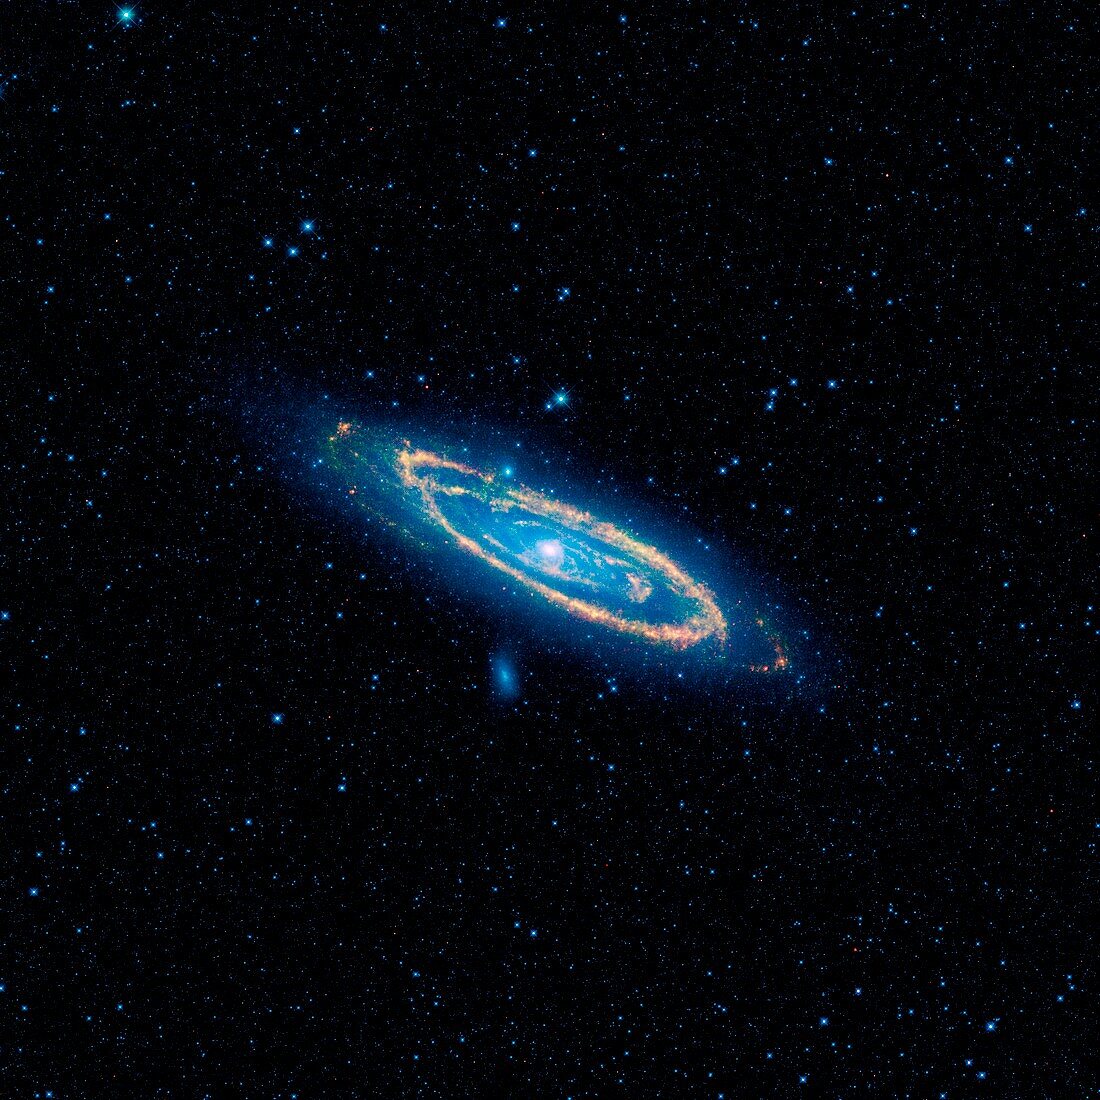 Andromeda Galaxy,space telescope image